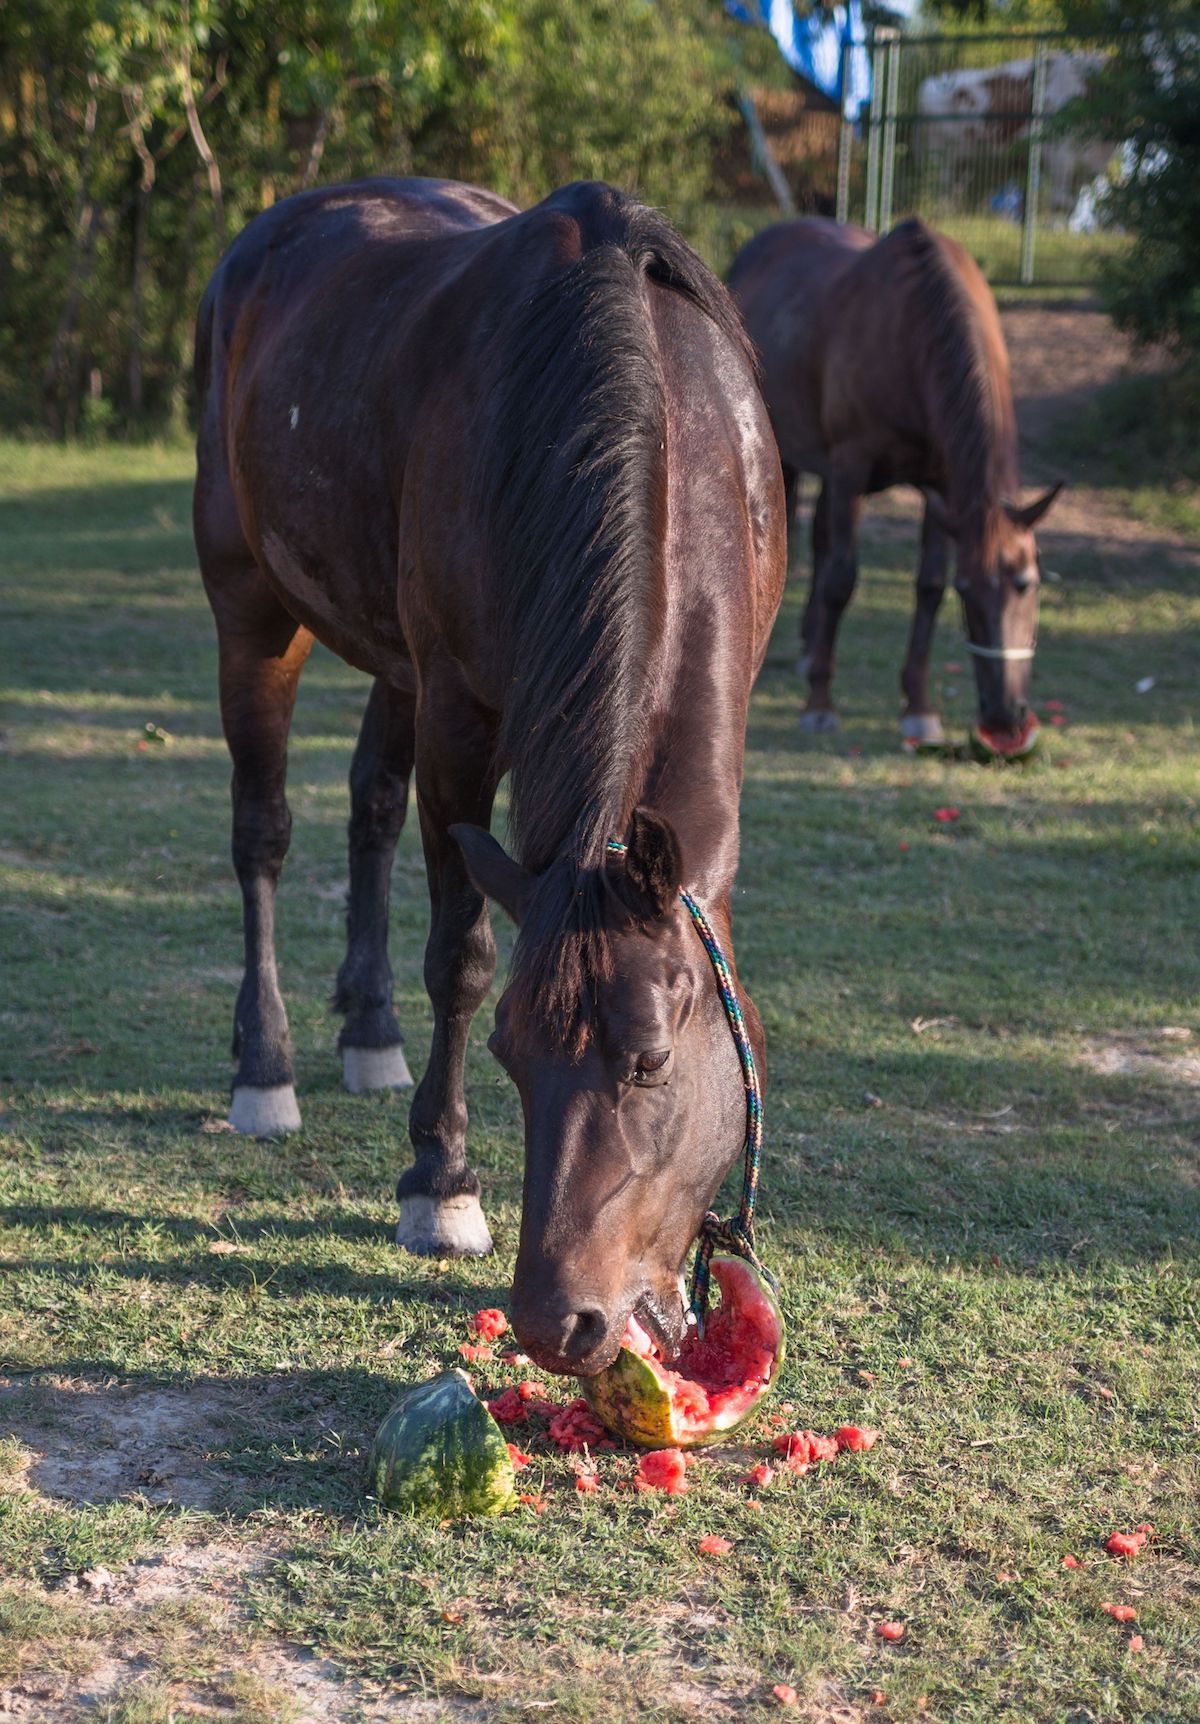 Horses eating watermelons